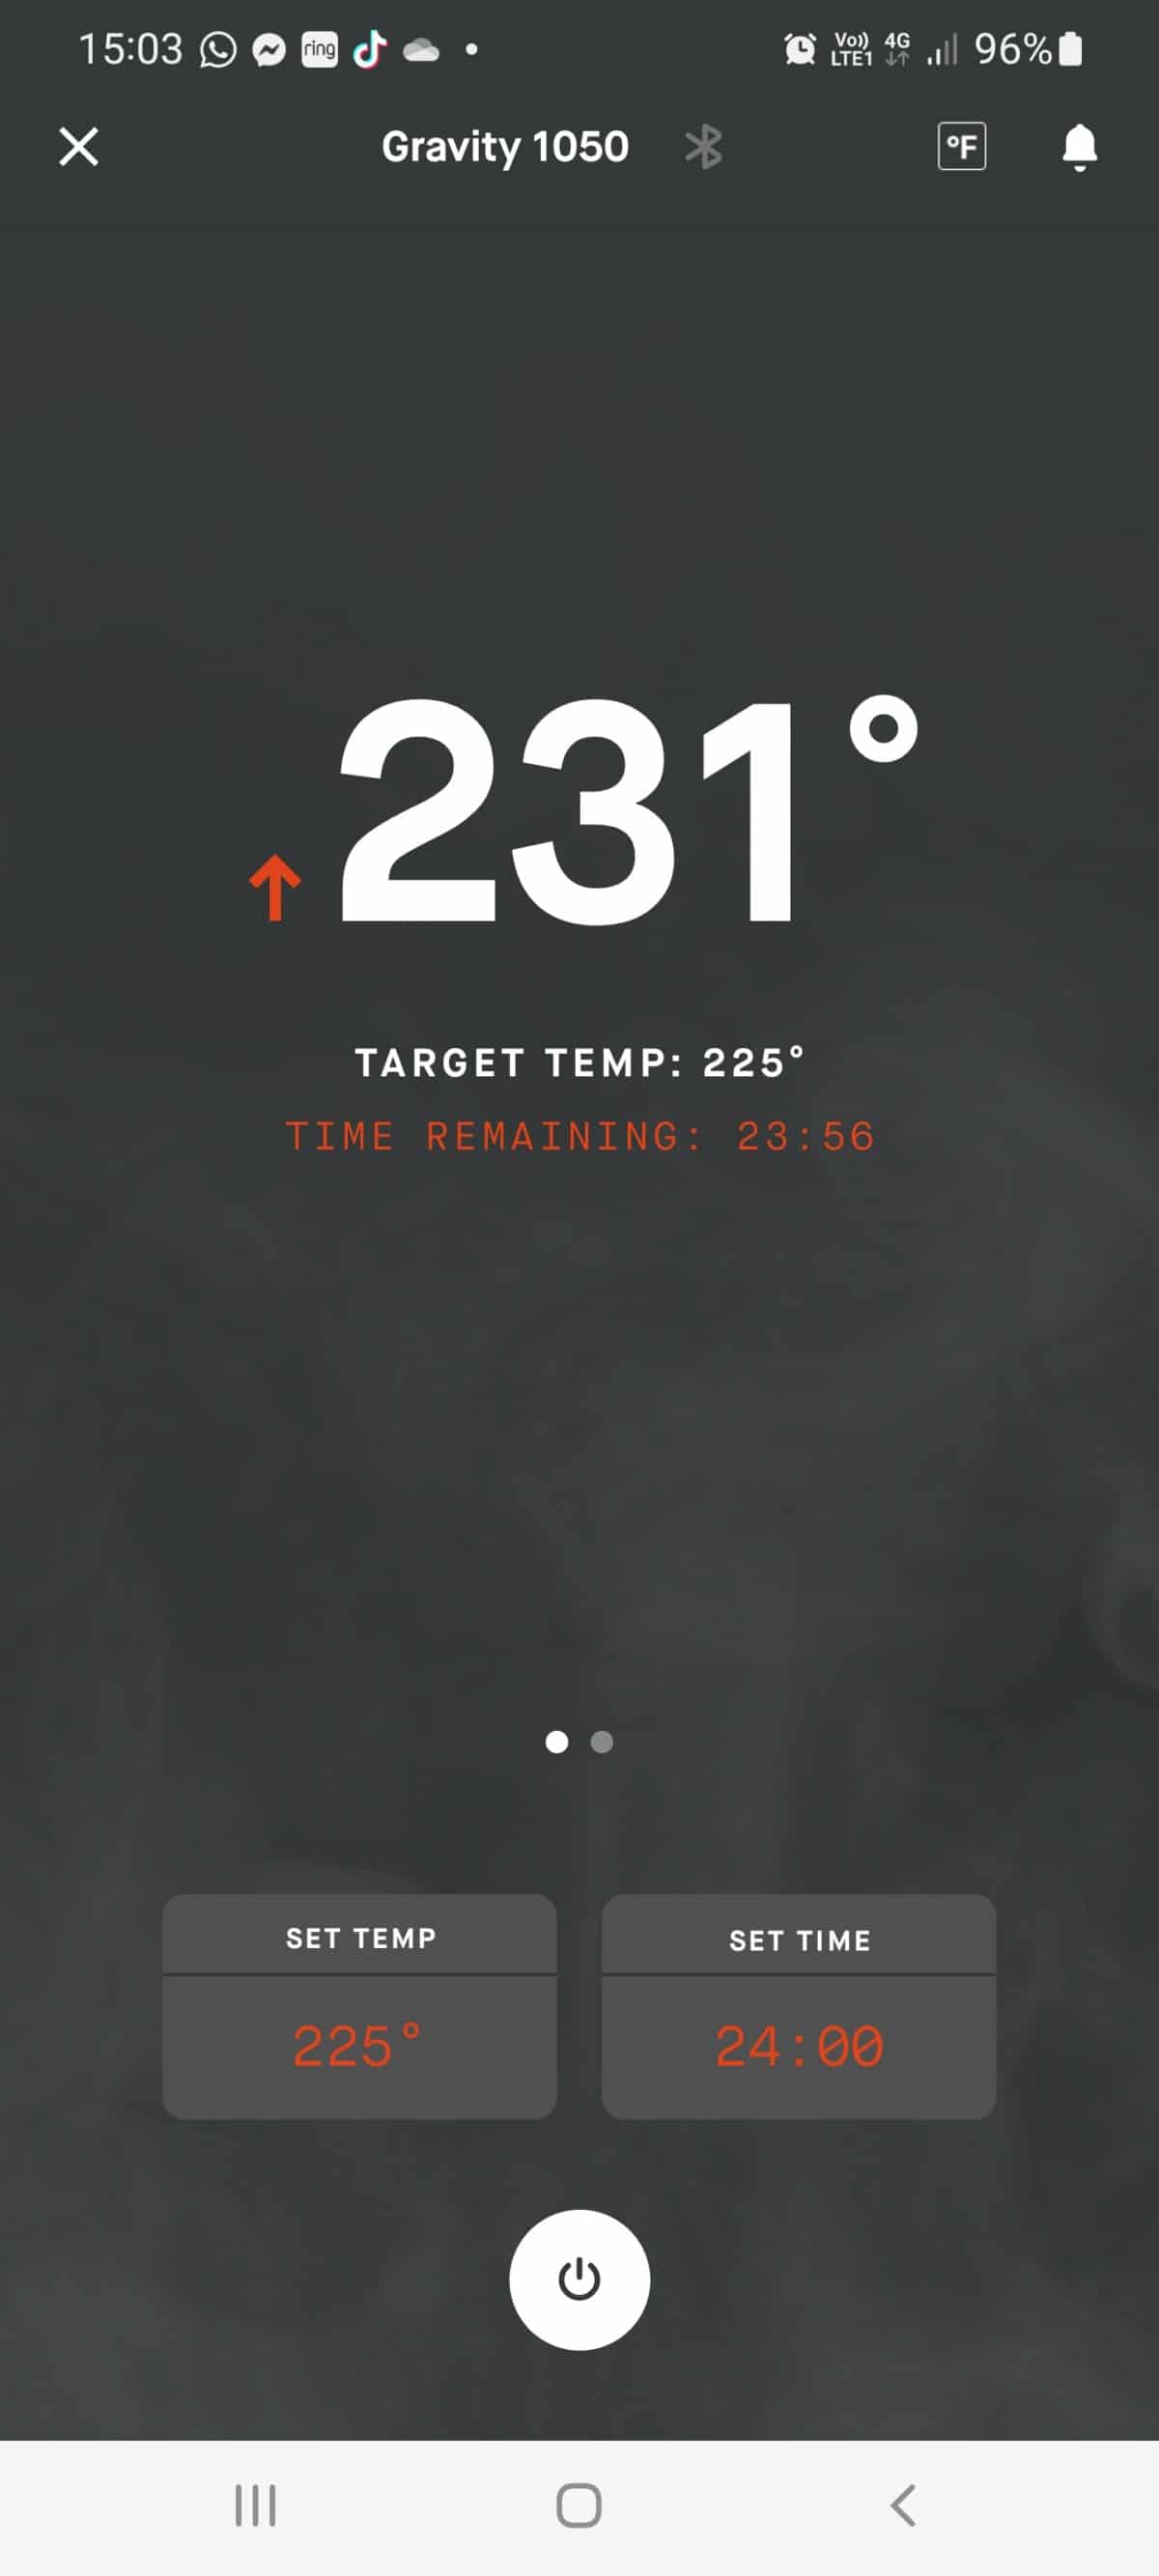 Masterbuilt gravity series smartphone app screenshot showing 231 degrees F.